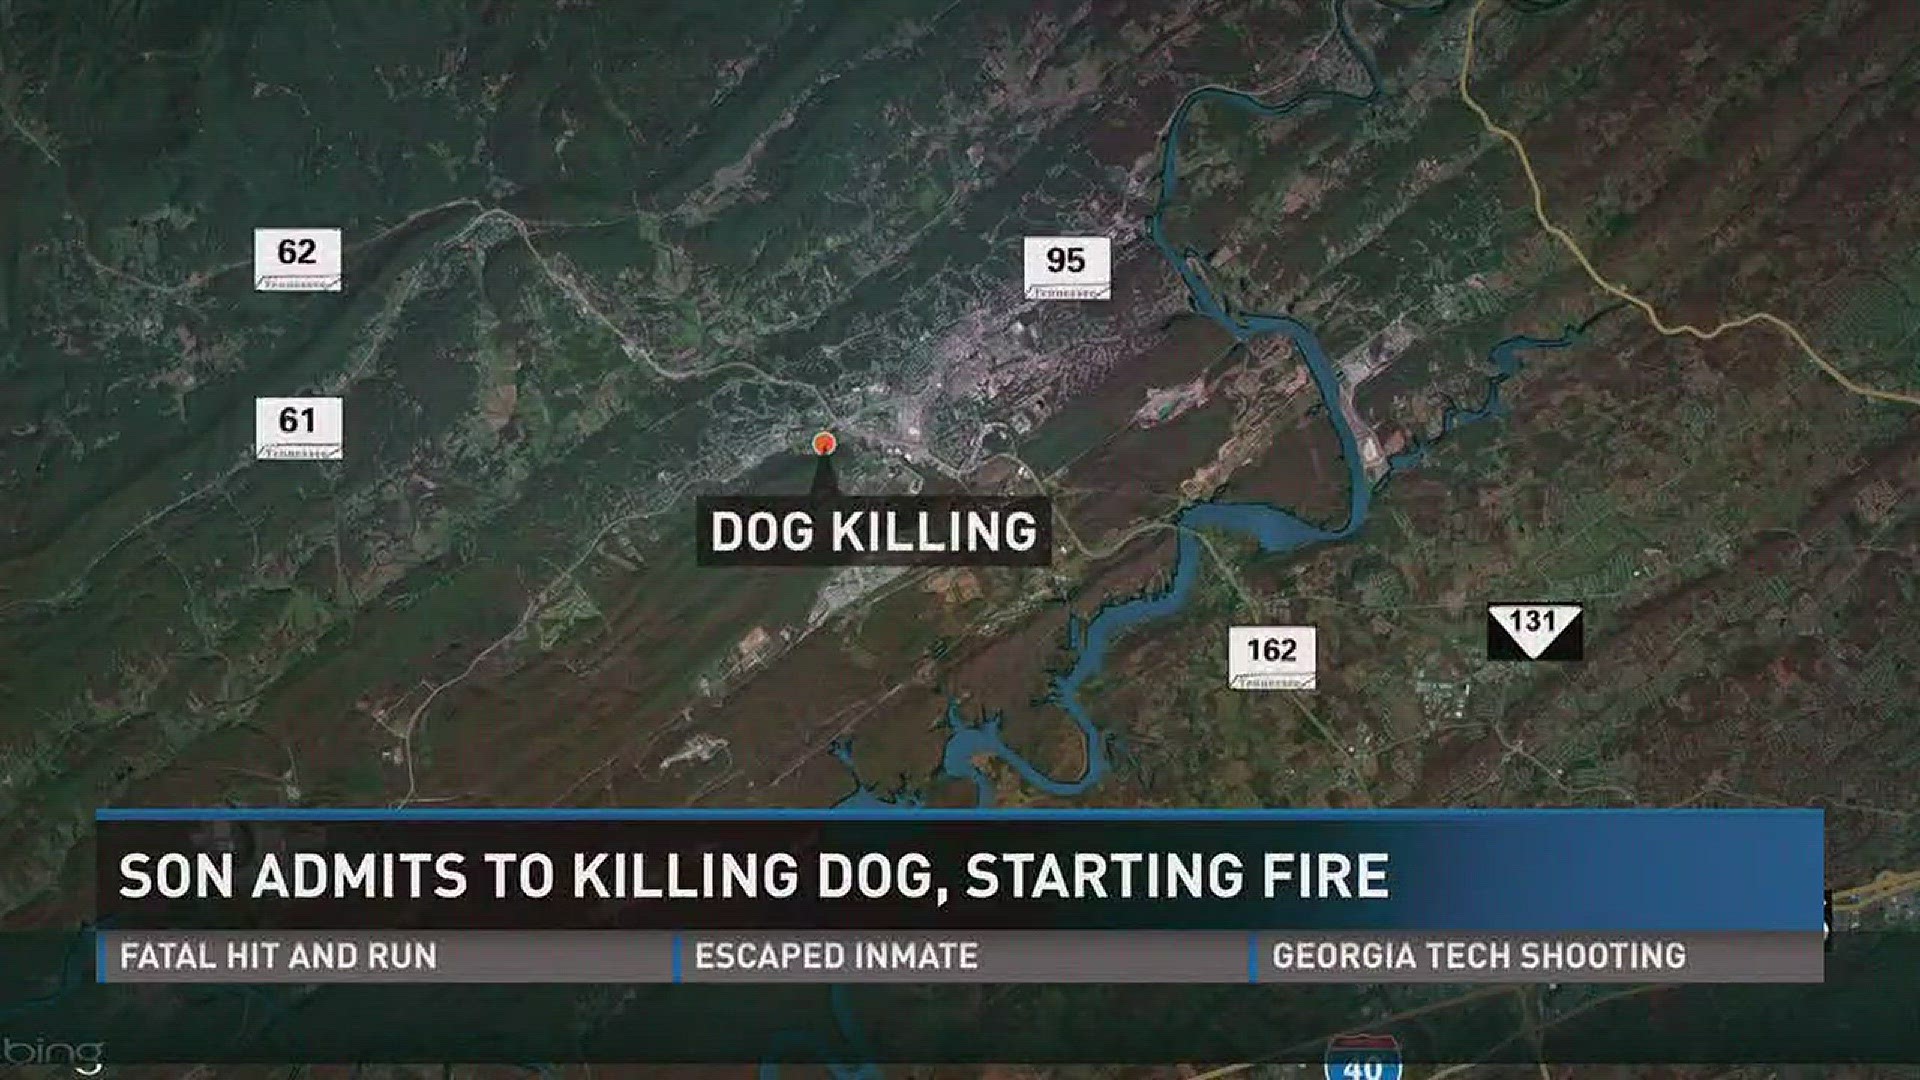 Son admits to kill dog, starting fire in Oak Ridge.